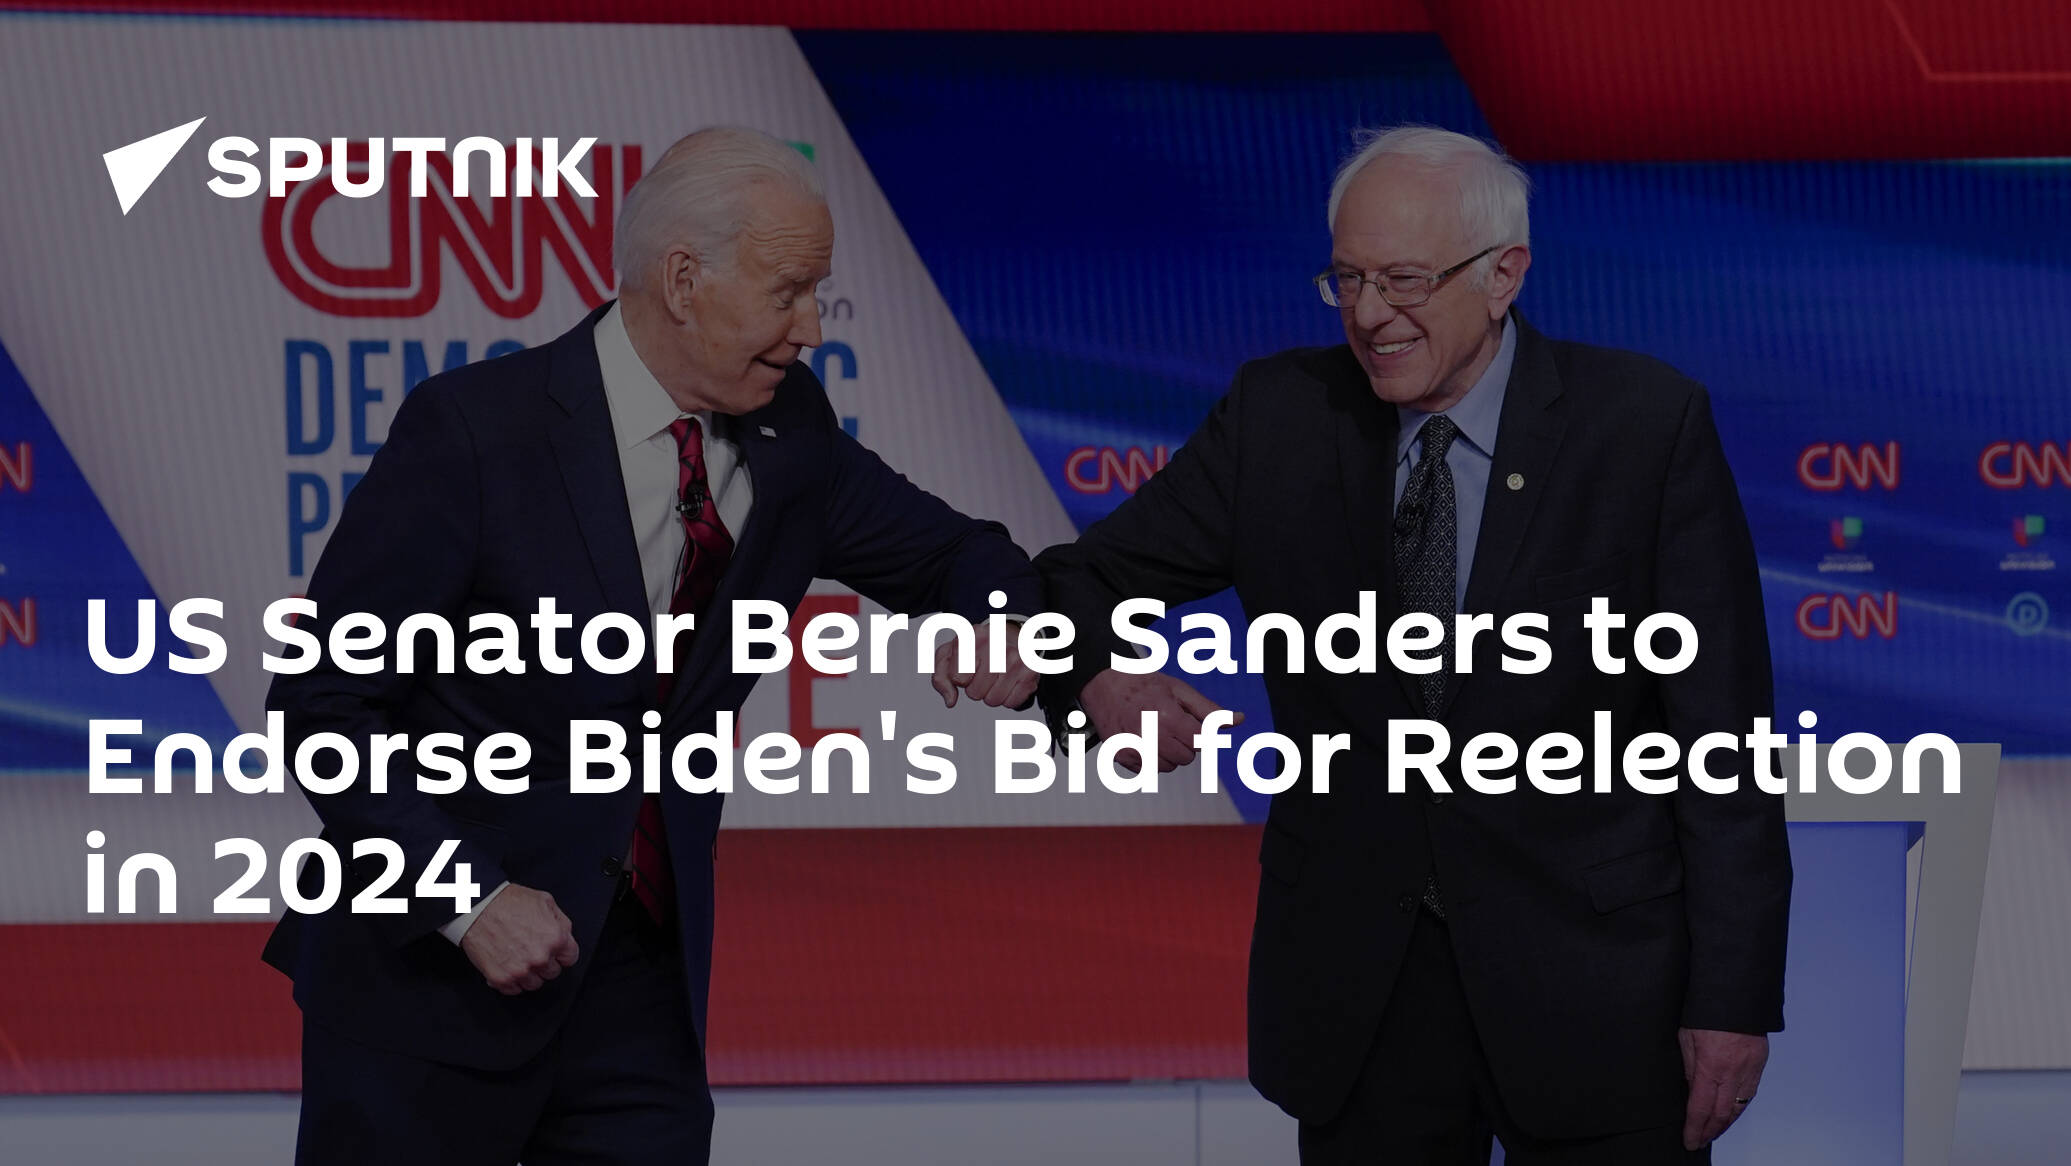 US Senator Bernie Sanders to Endorse Biden's Bid for Reelection in 2024